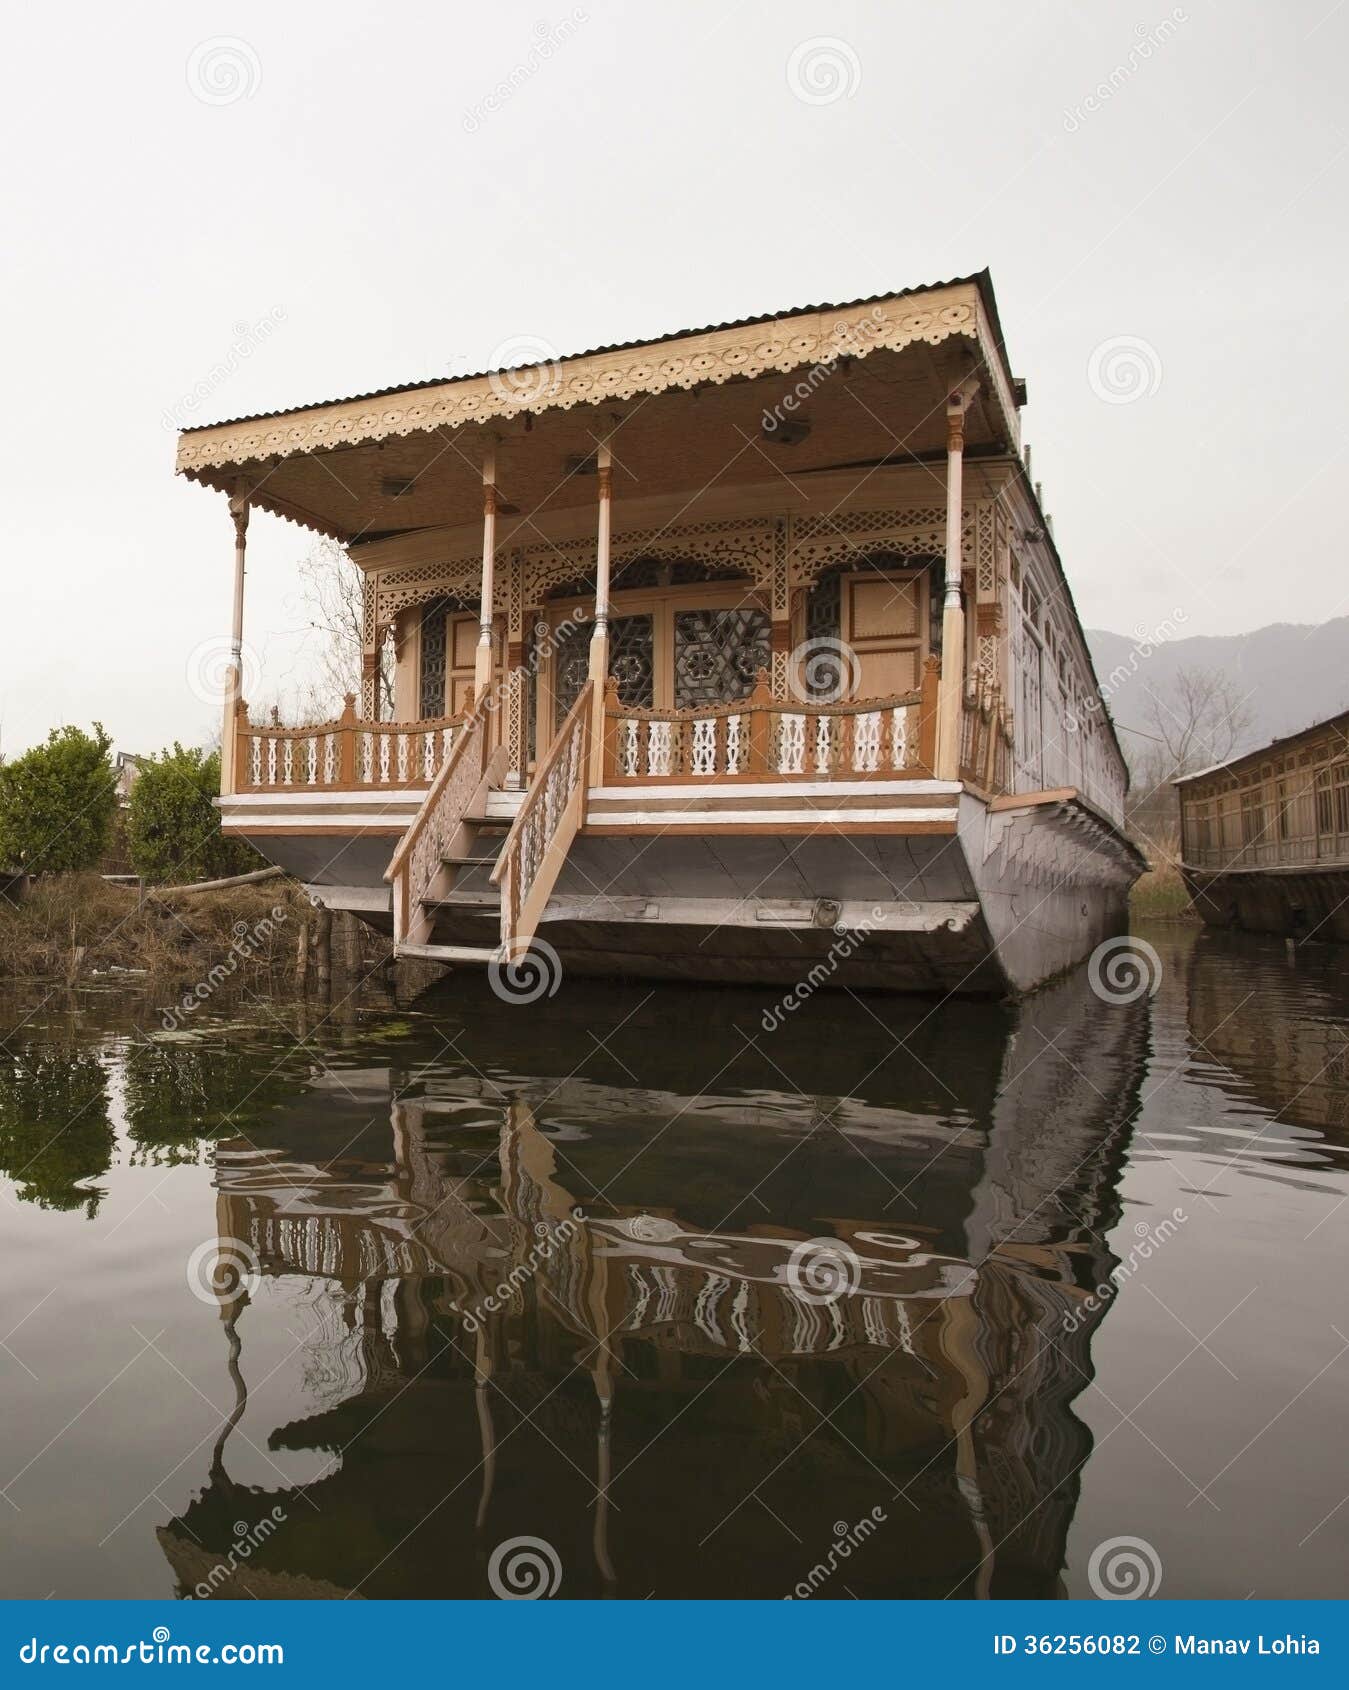 houseboat in a lake, dal lake, srinagar, jammu and kashmir, india